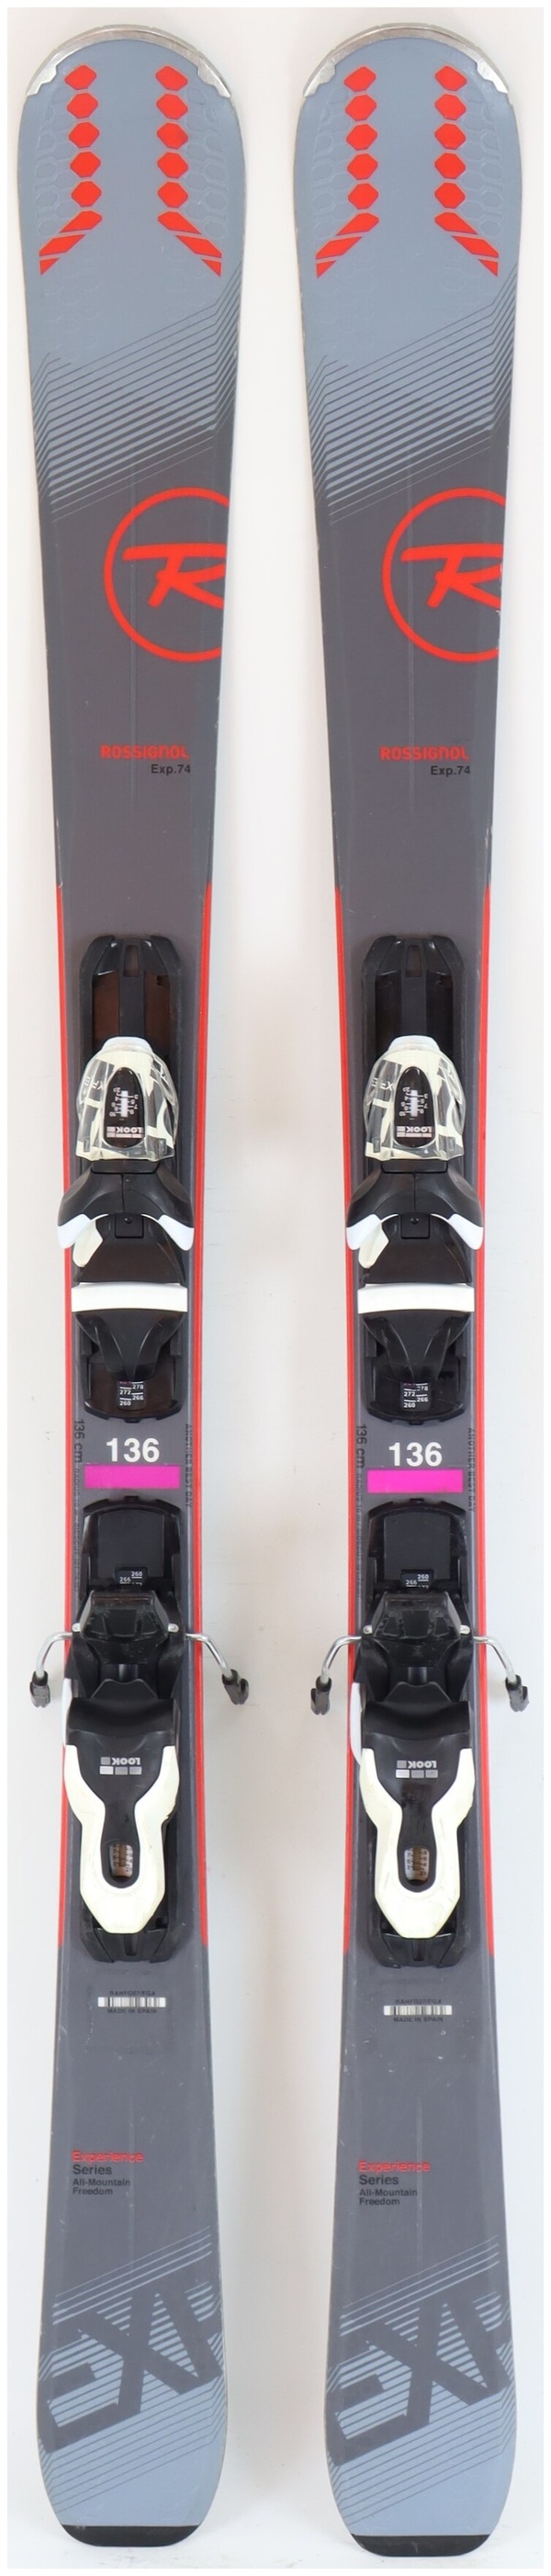 2021 Rossignol Experience 74 RTL 136cm Used Demo Skis on Sale